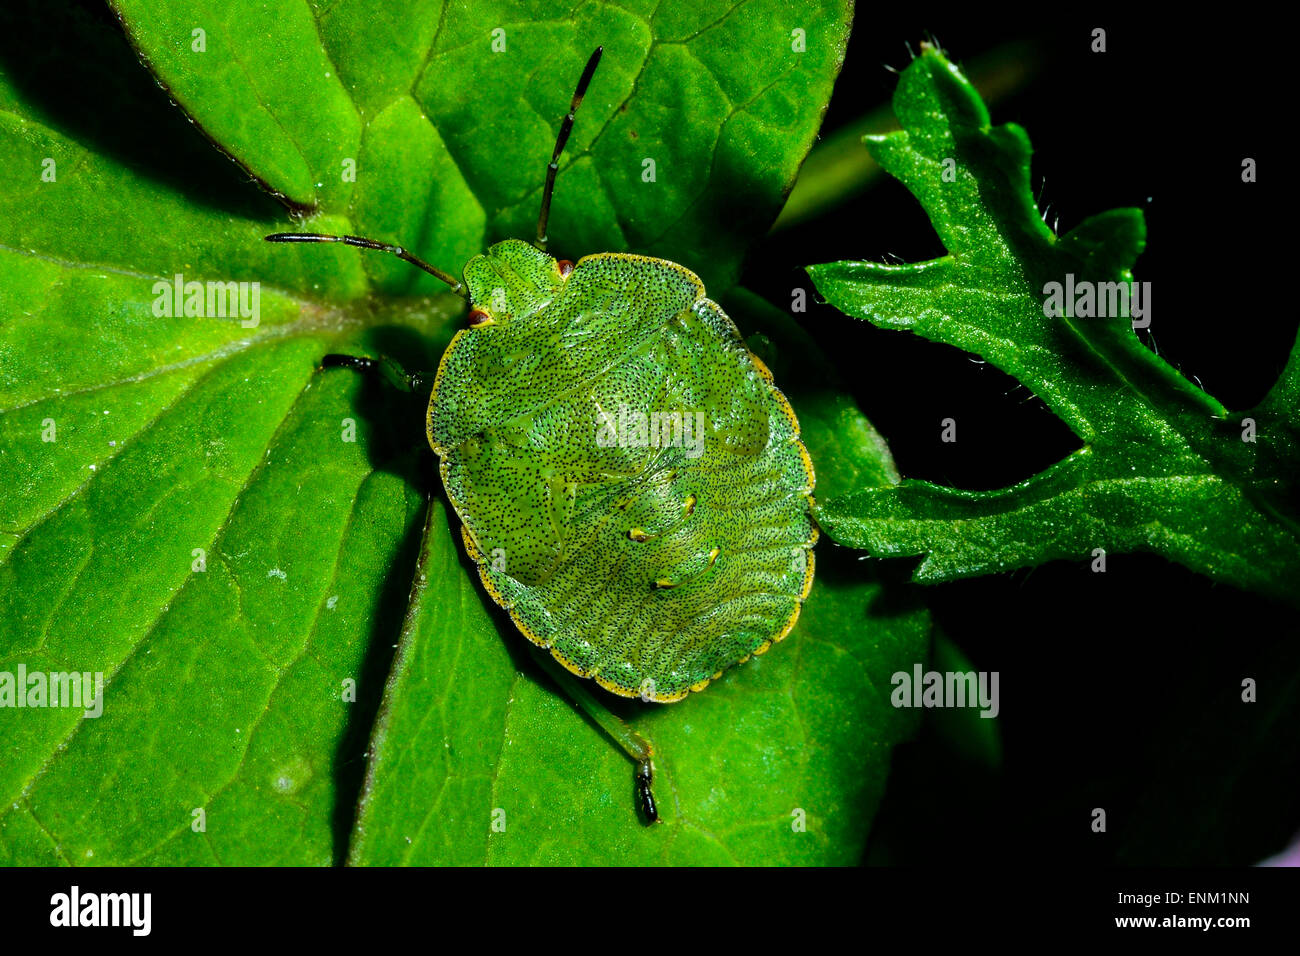 green shield bug, palomena prasina Stock Photo